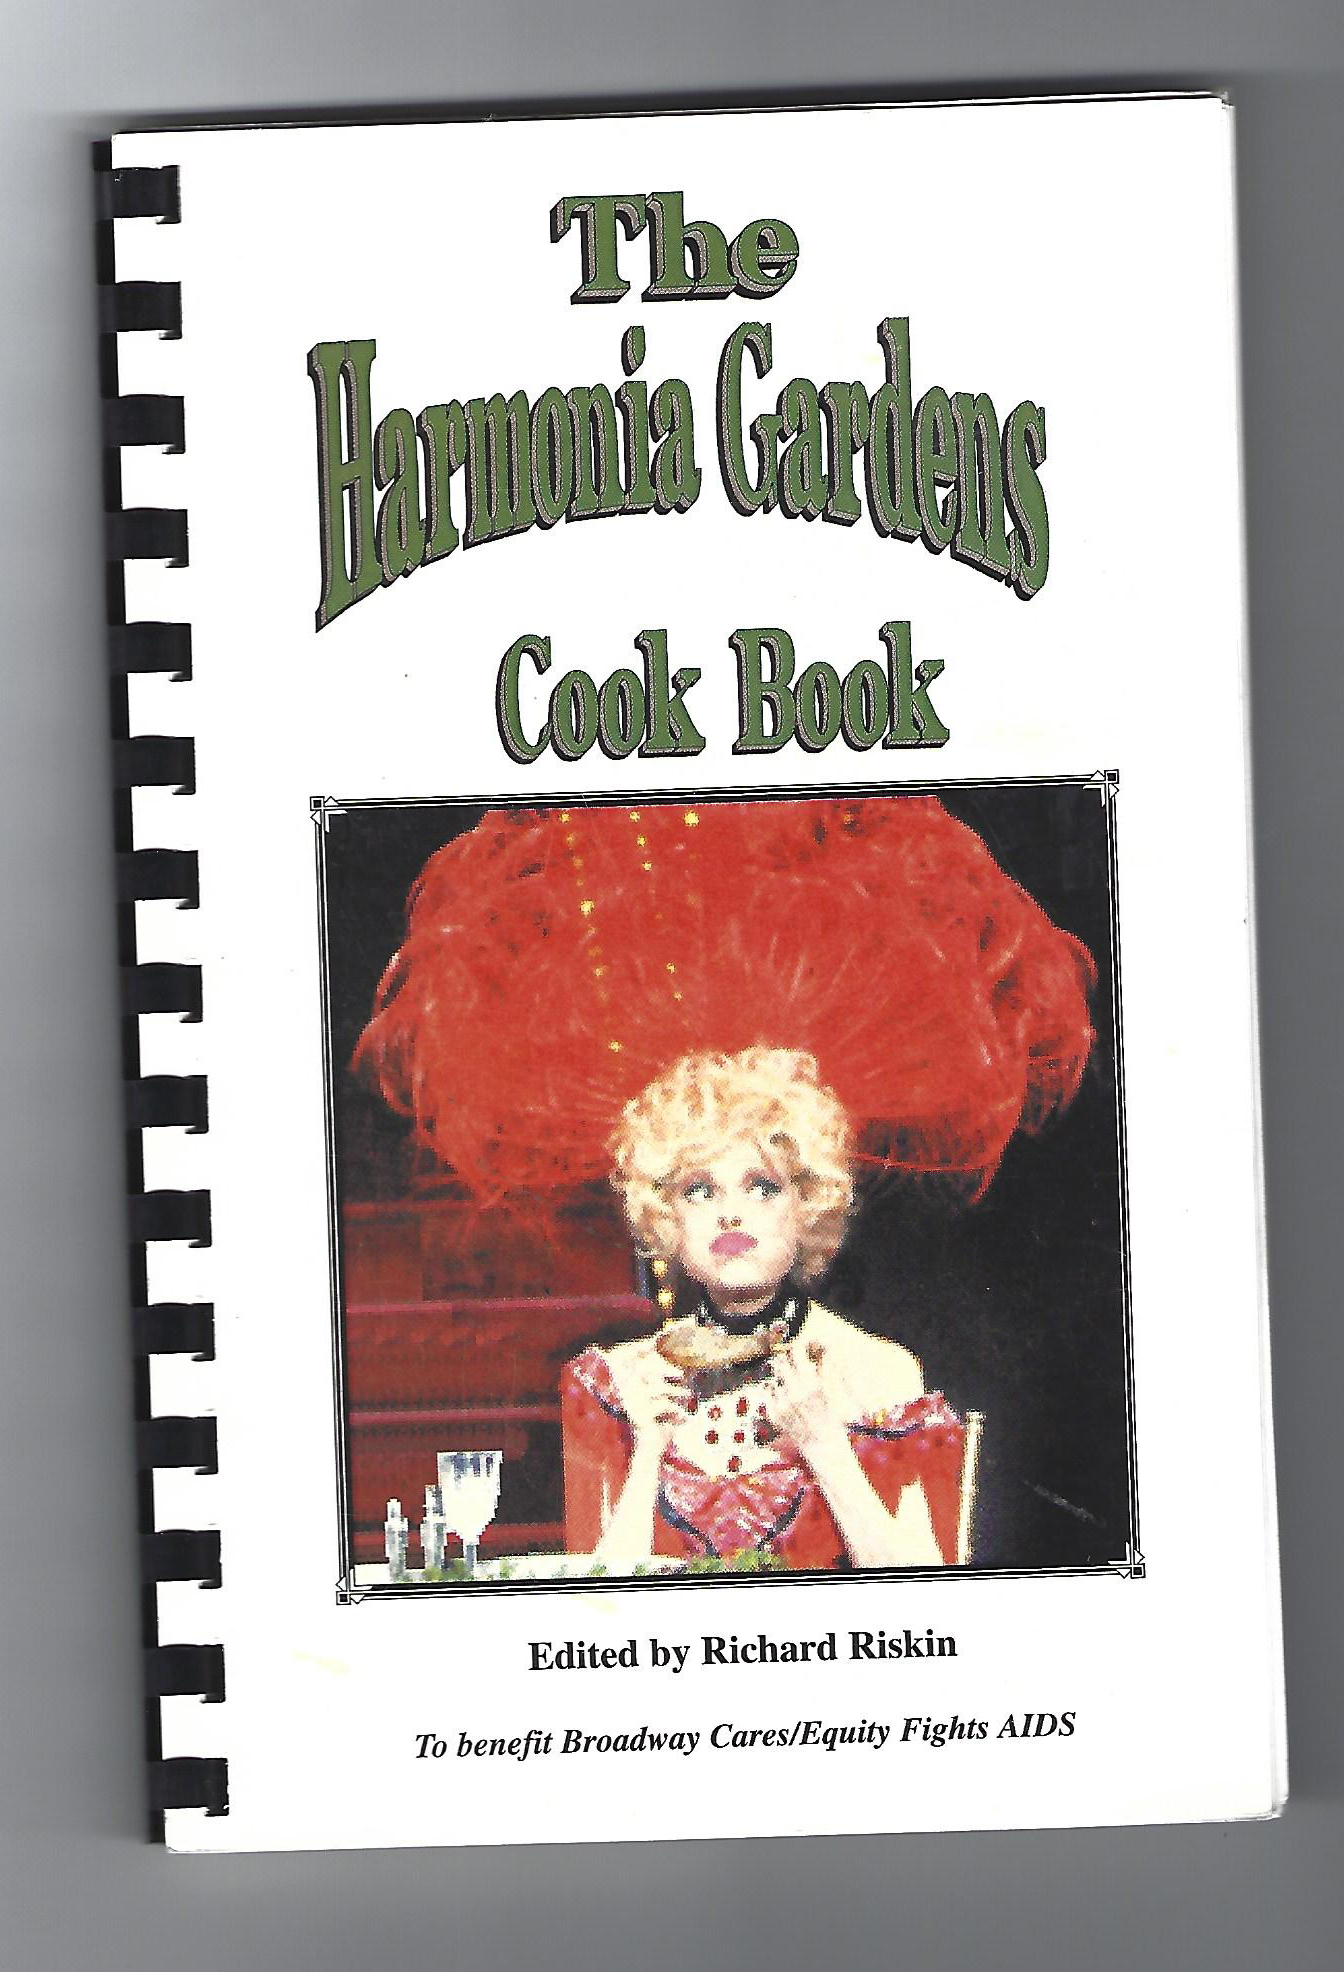 Harmonia Gardens Cook Book.jpg